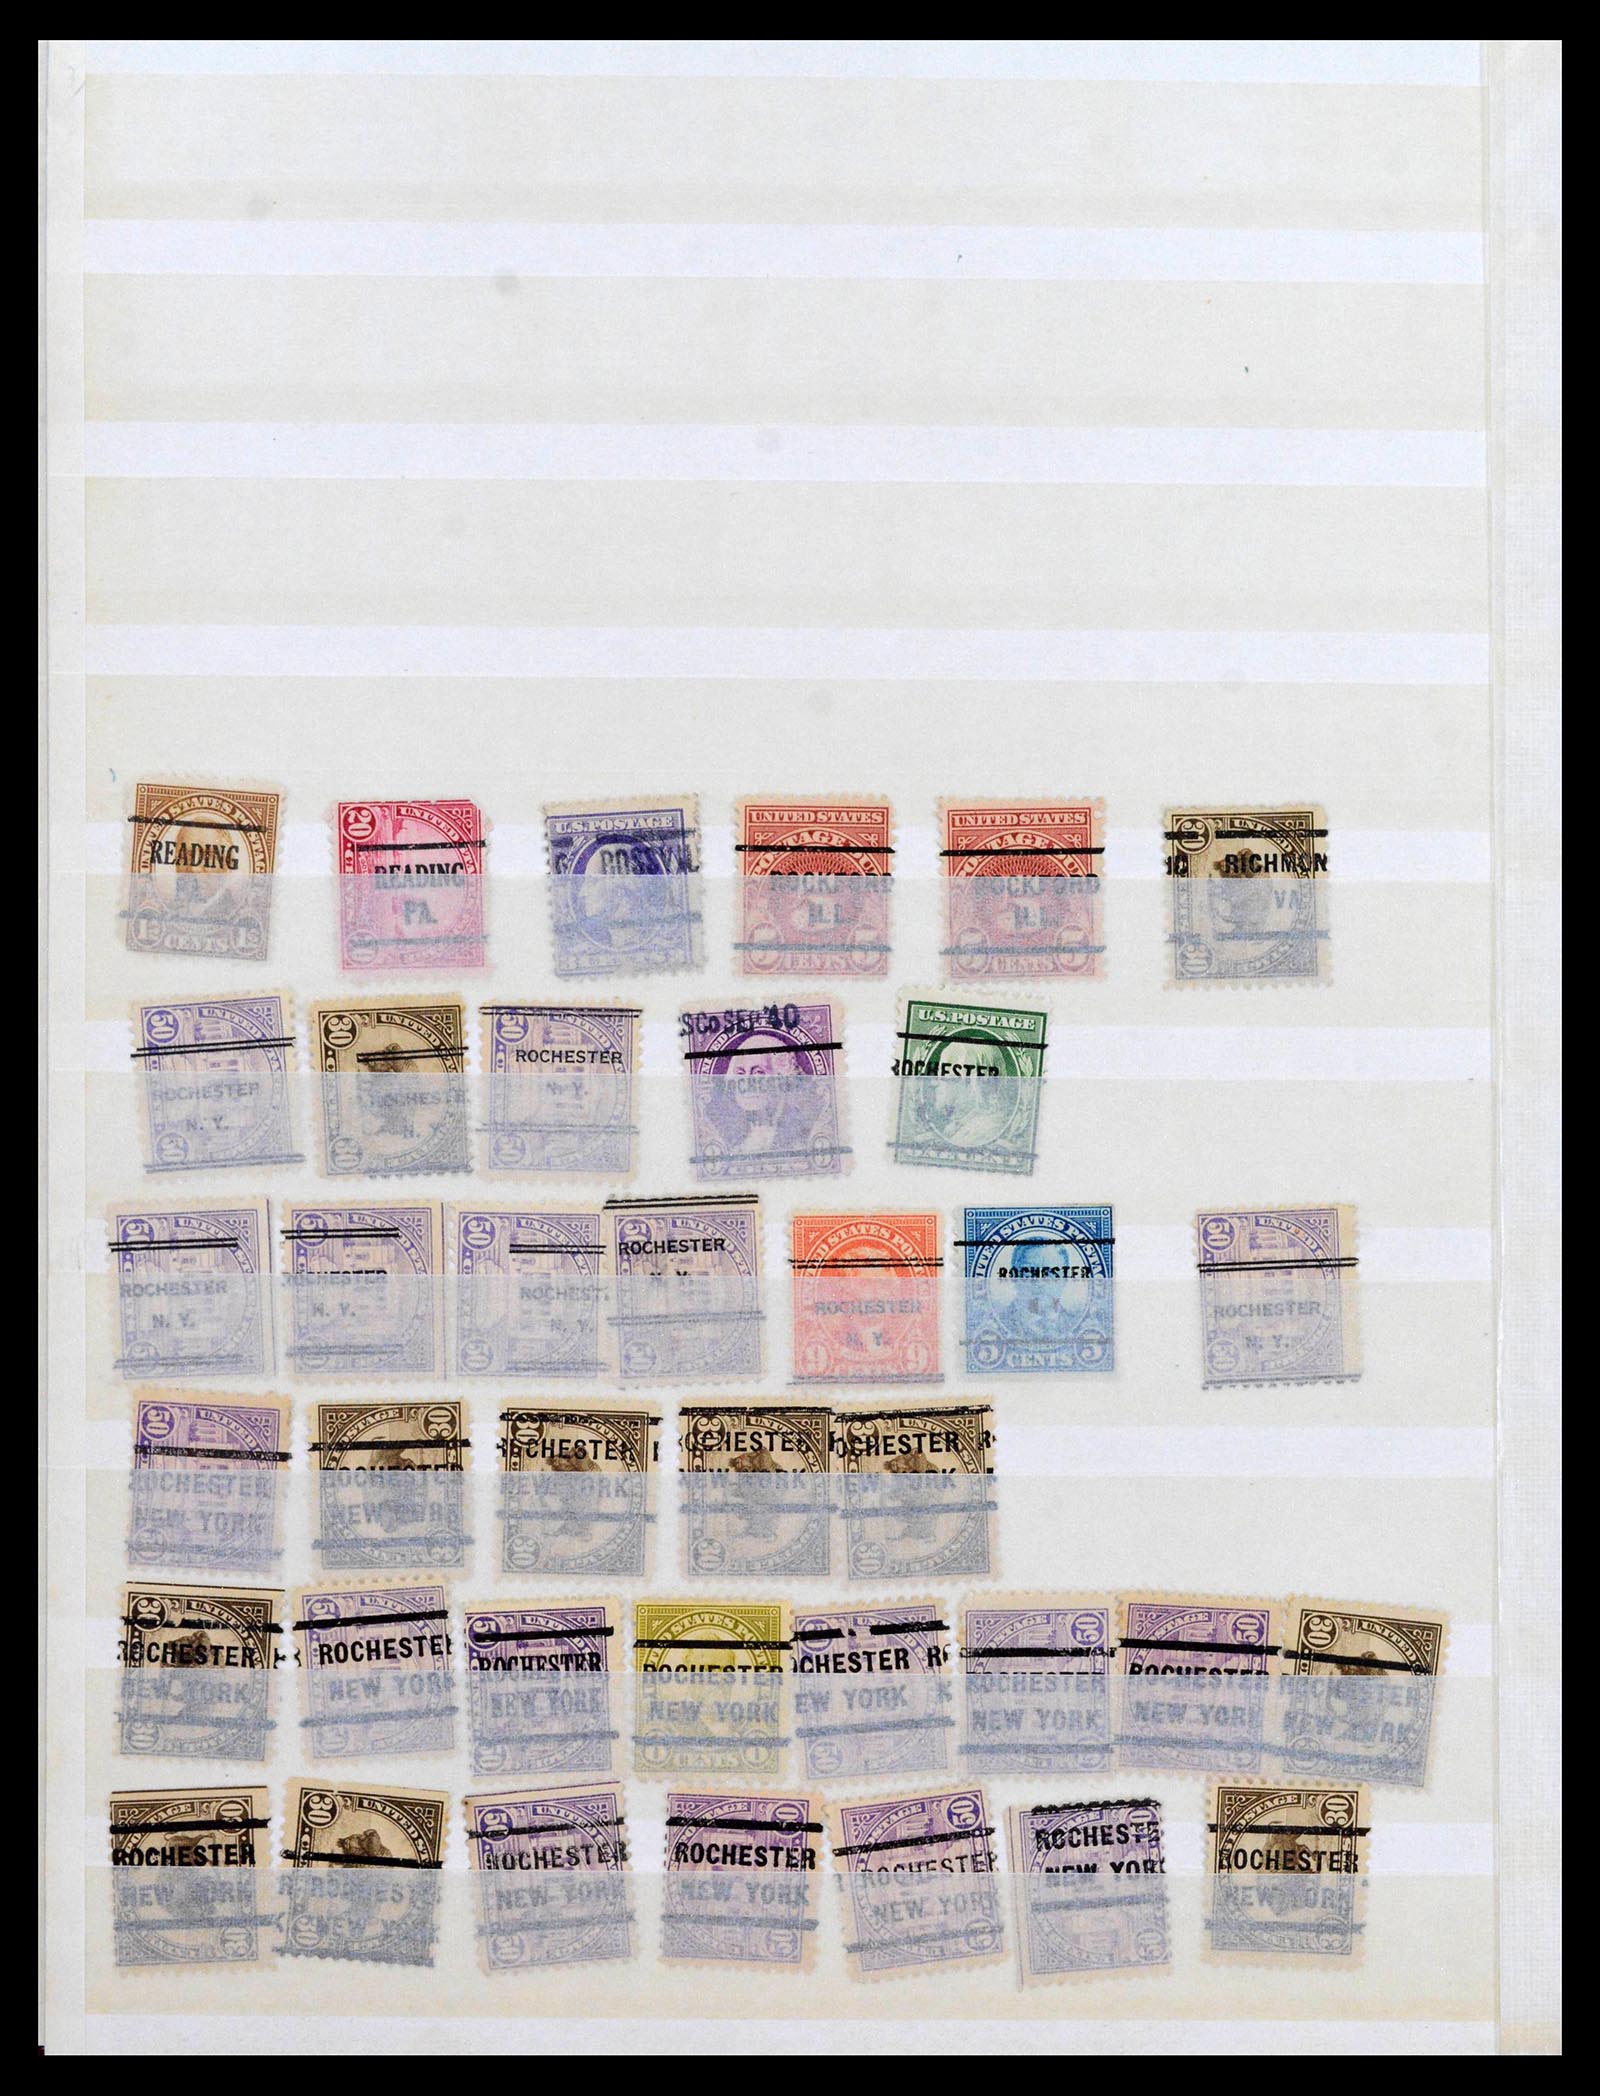 39366 0020 - Stamp collection 39366 USA precancels 1892-1940.